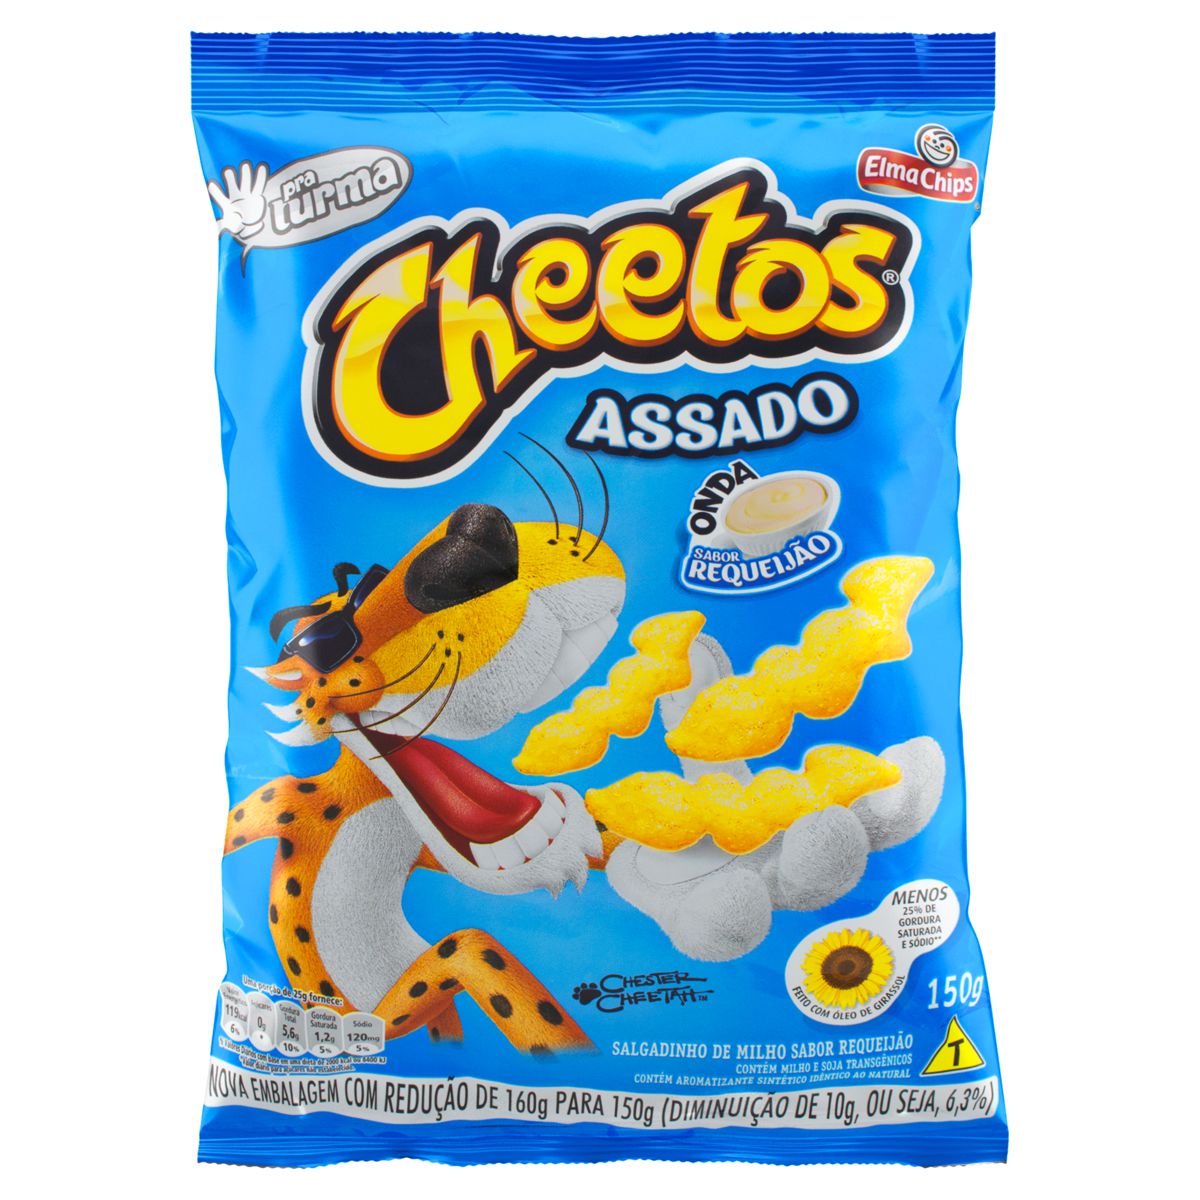 Cheetos Requeijão 160g - pastelonline